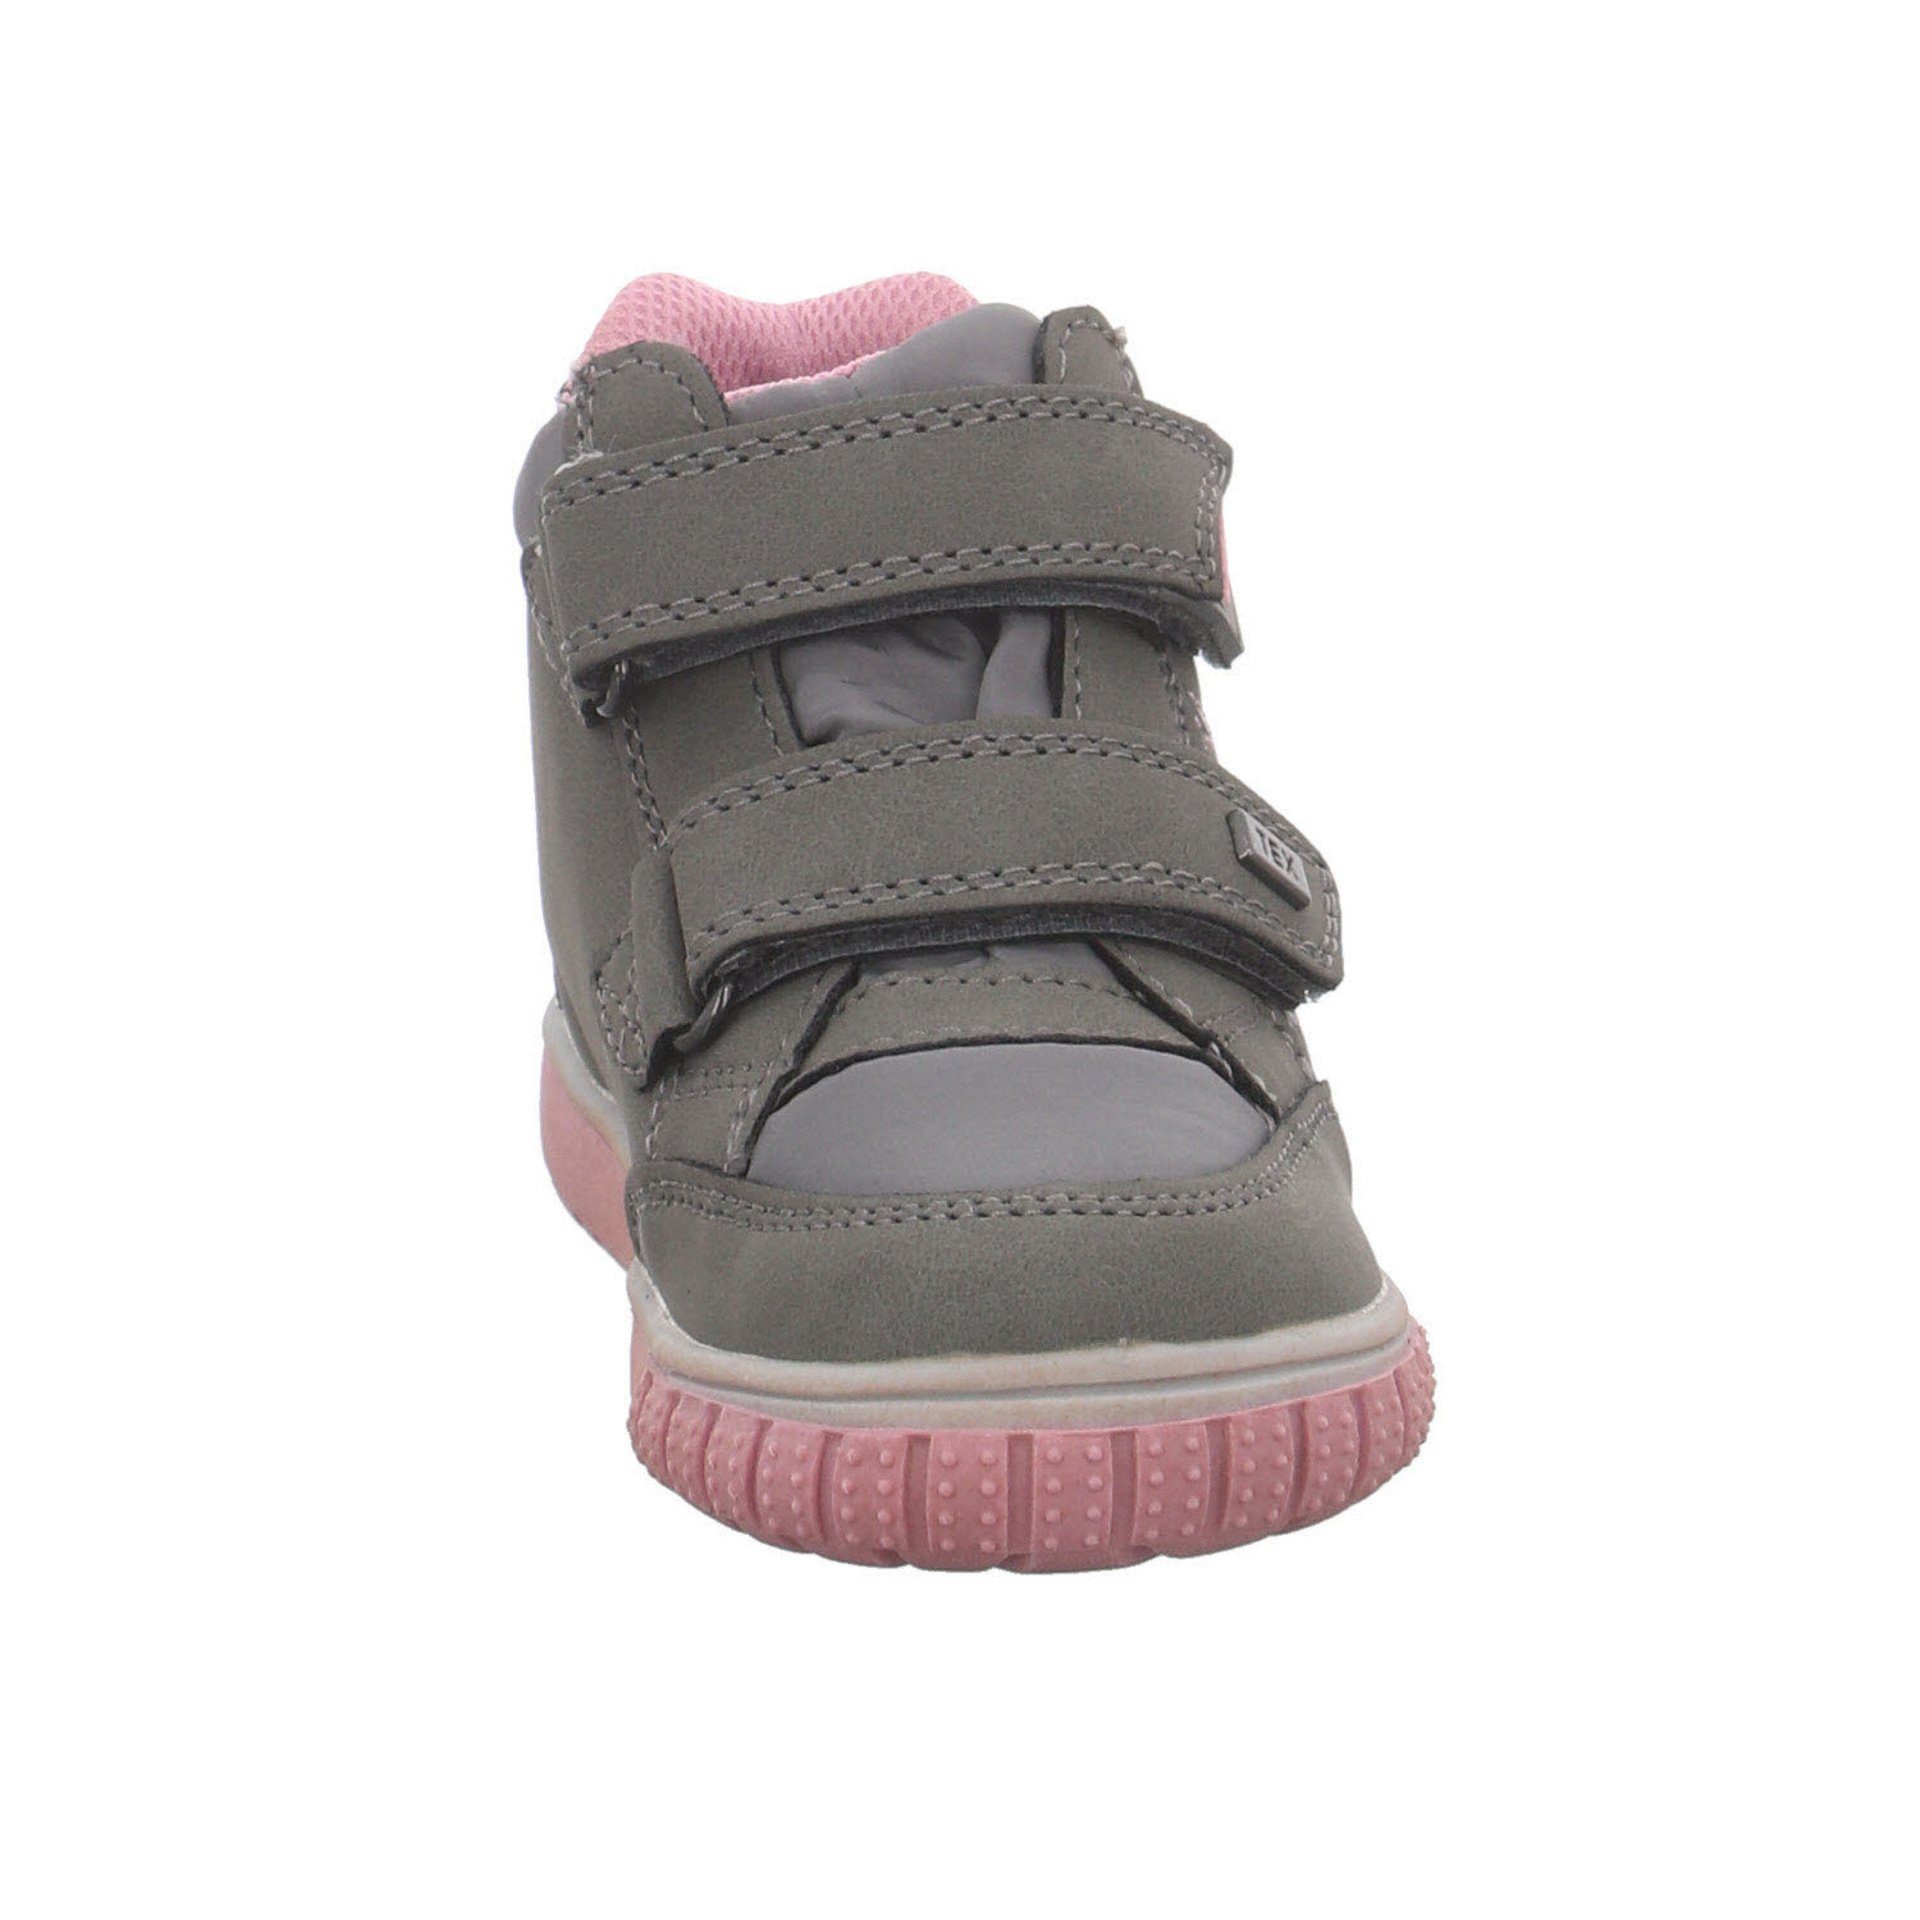 Lurchi Krabbelschuhe Baby Synthetikkombination Boots Stiefelette grey Lauflernschuhe rose Jotti-Tex